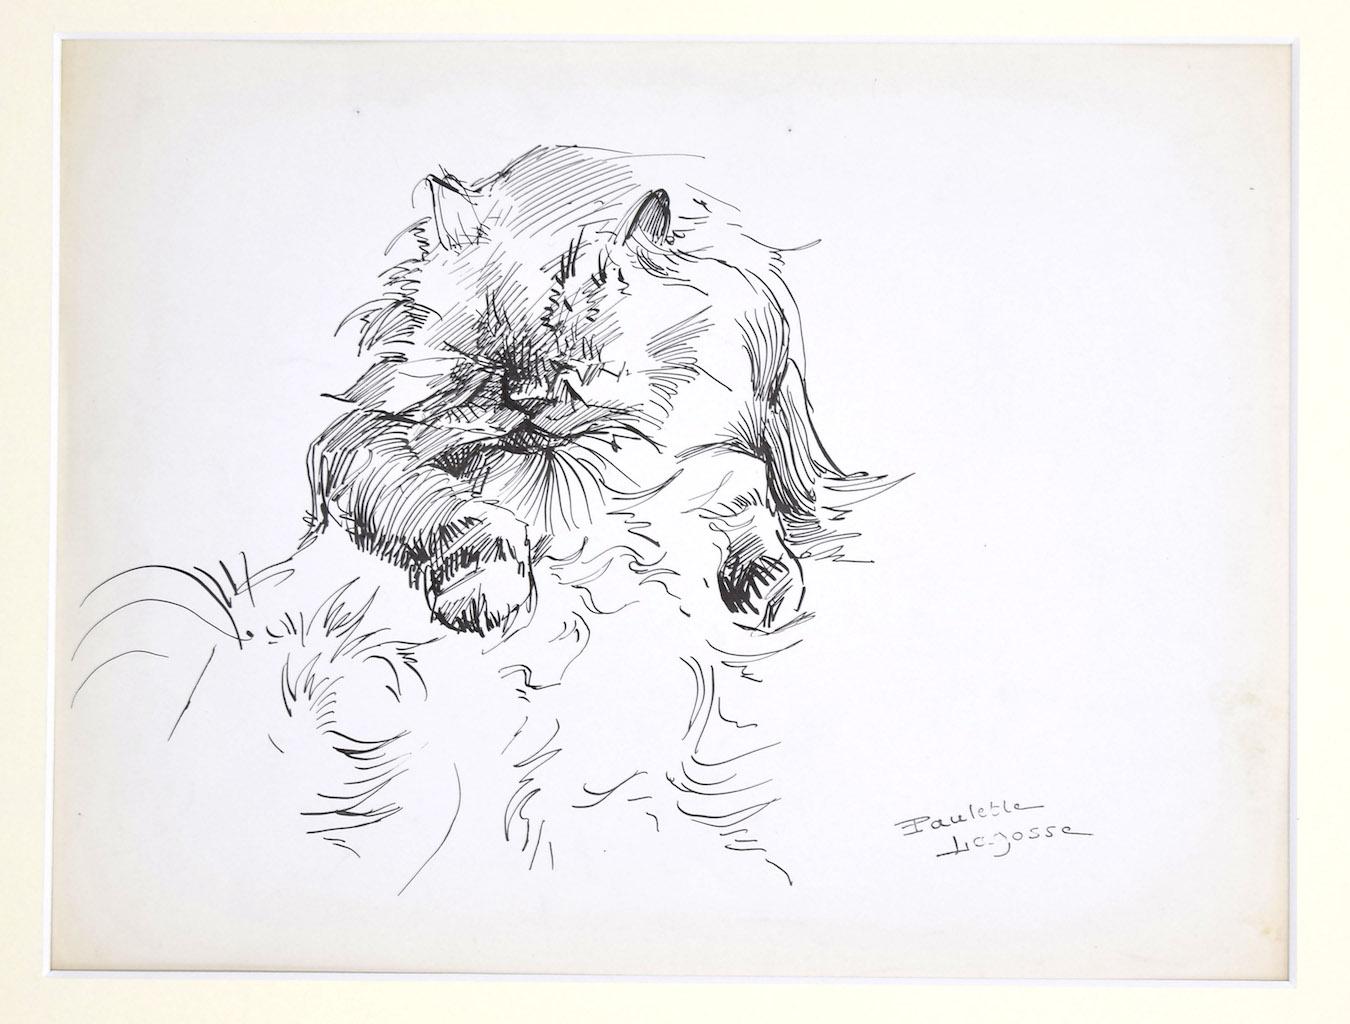 Marie Paulette Lagosse Animal Art - The Cat - Pen on Paper by M. P. Lagosse - 1970s